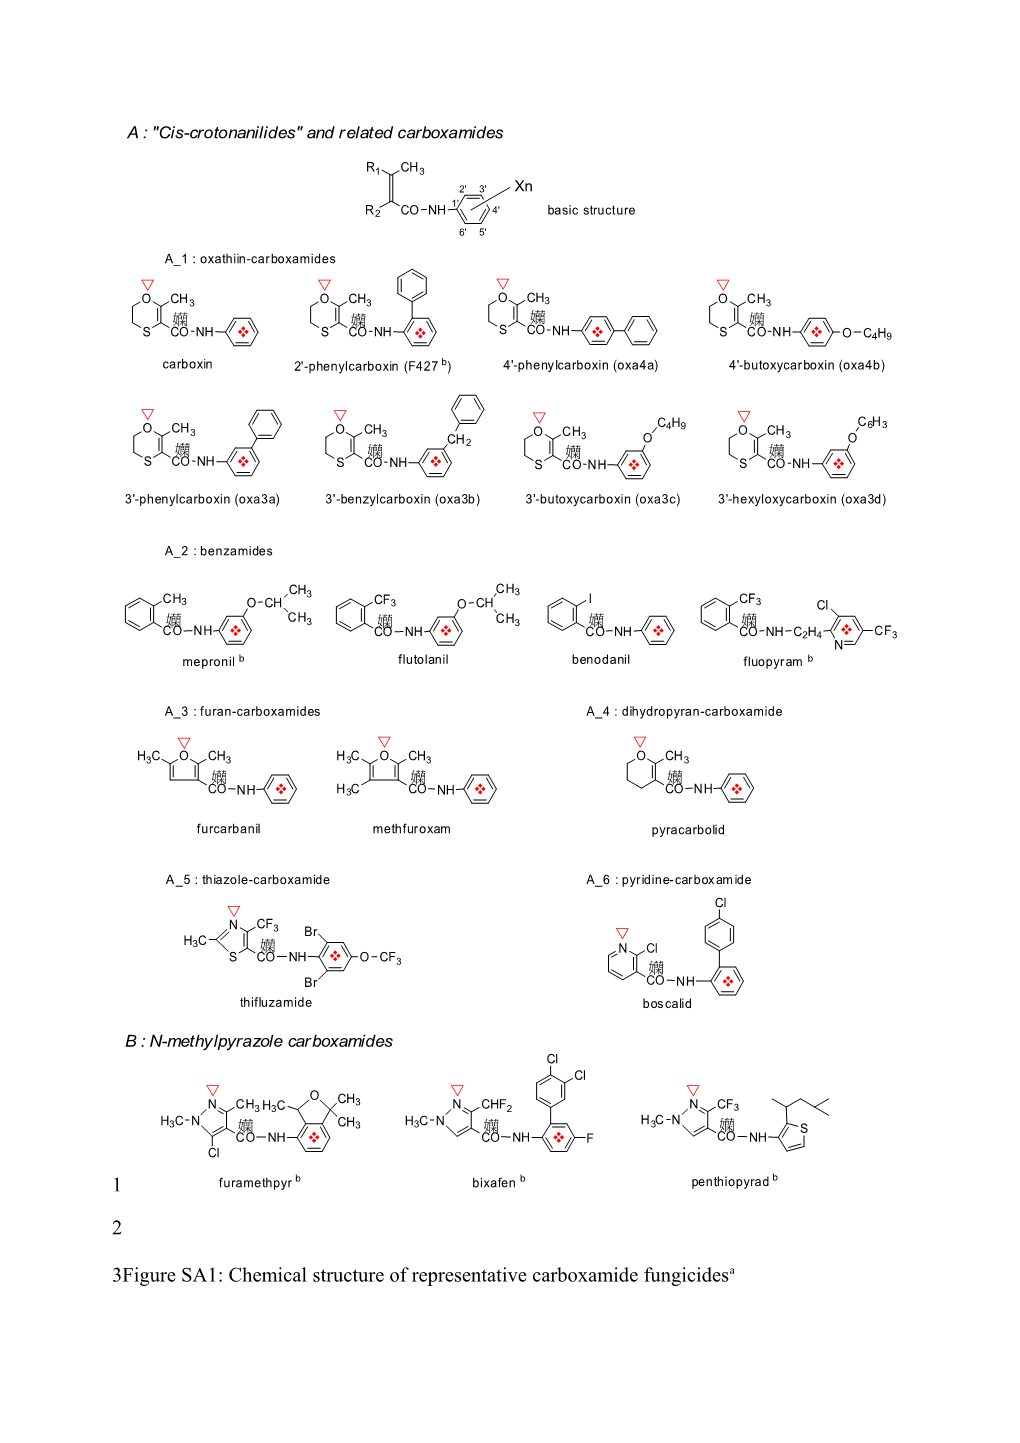 Figure SA1: Chemical Structure of Representative Carboxamide Fungicidesa